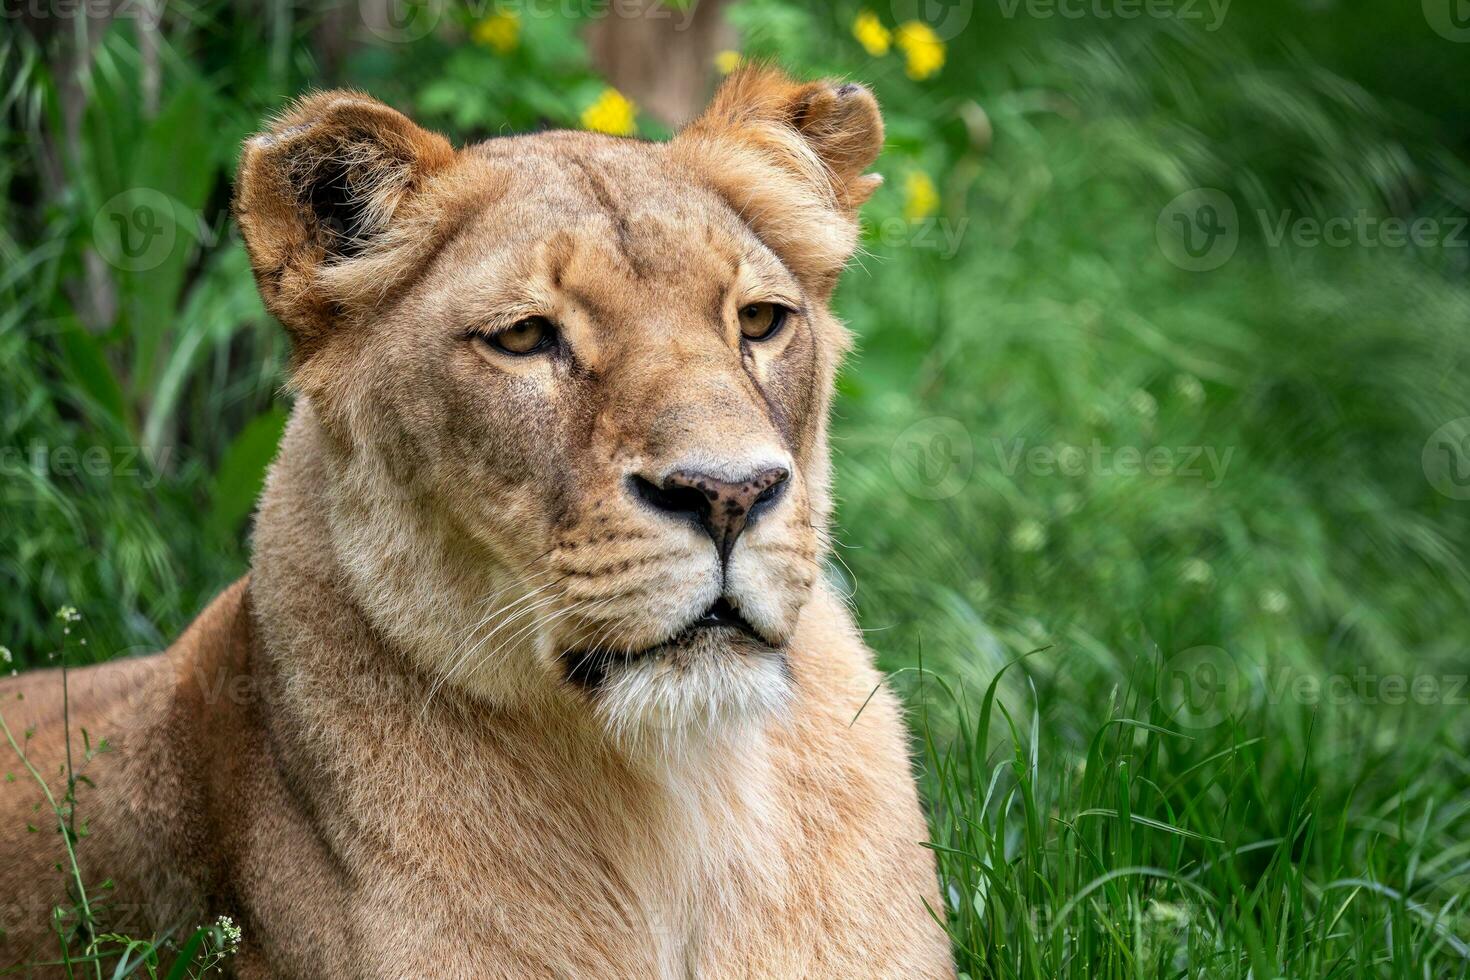 katanga leeuw of zuidwesten Afrikaanse leeuw, panthera Leo bleyenberghi. leeuwin in de gras. foto